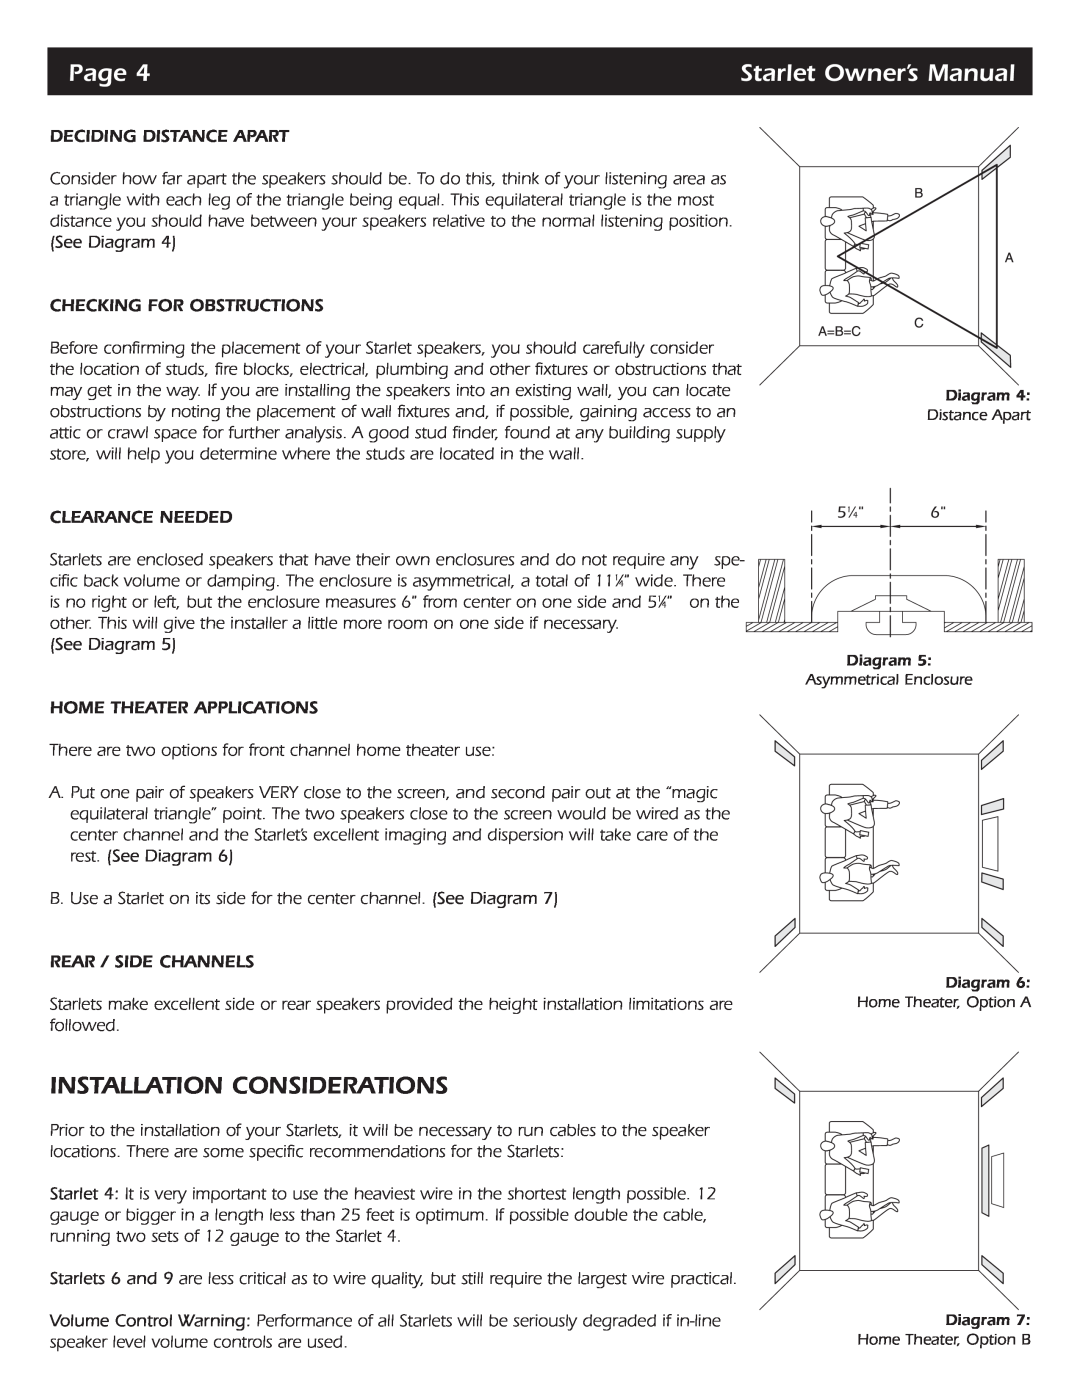 SpeakerCraft Starlet 4, Starlet 9, Starlet 6 owner manual Installation Considerations, Page 